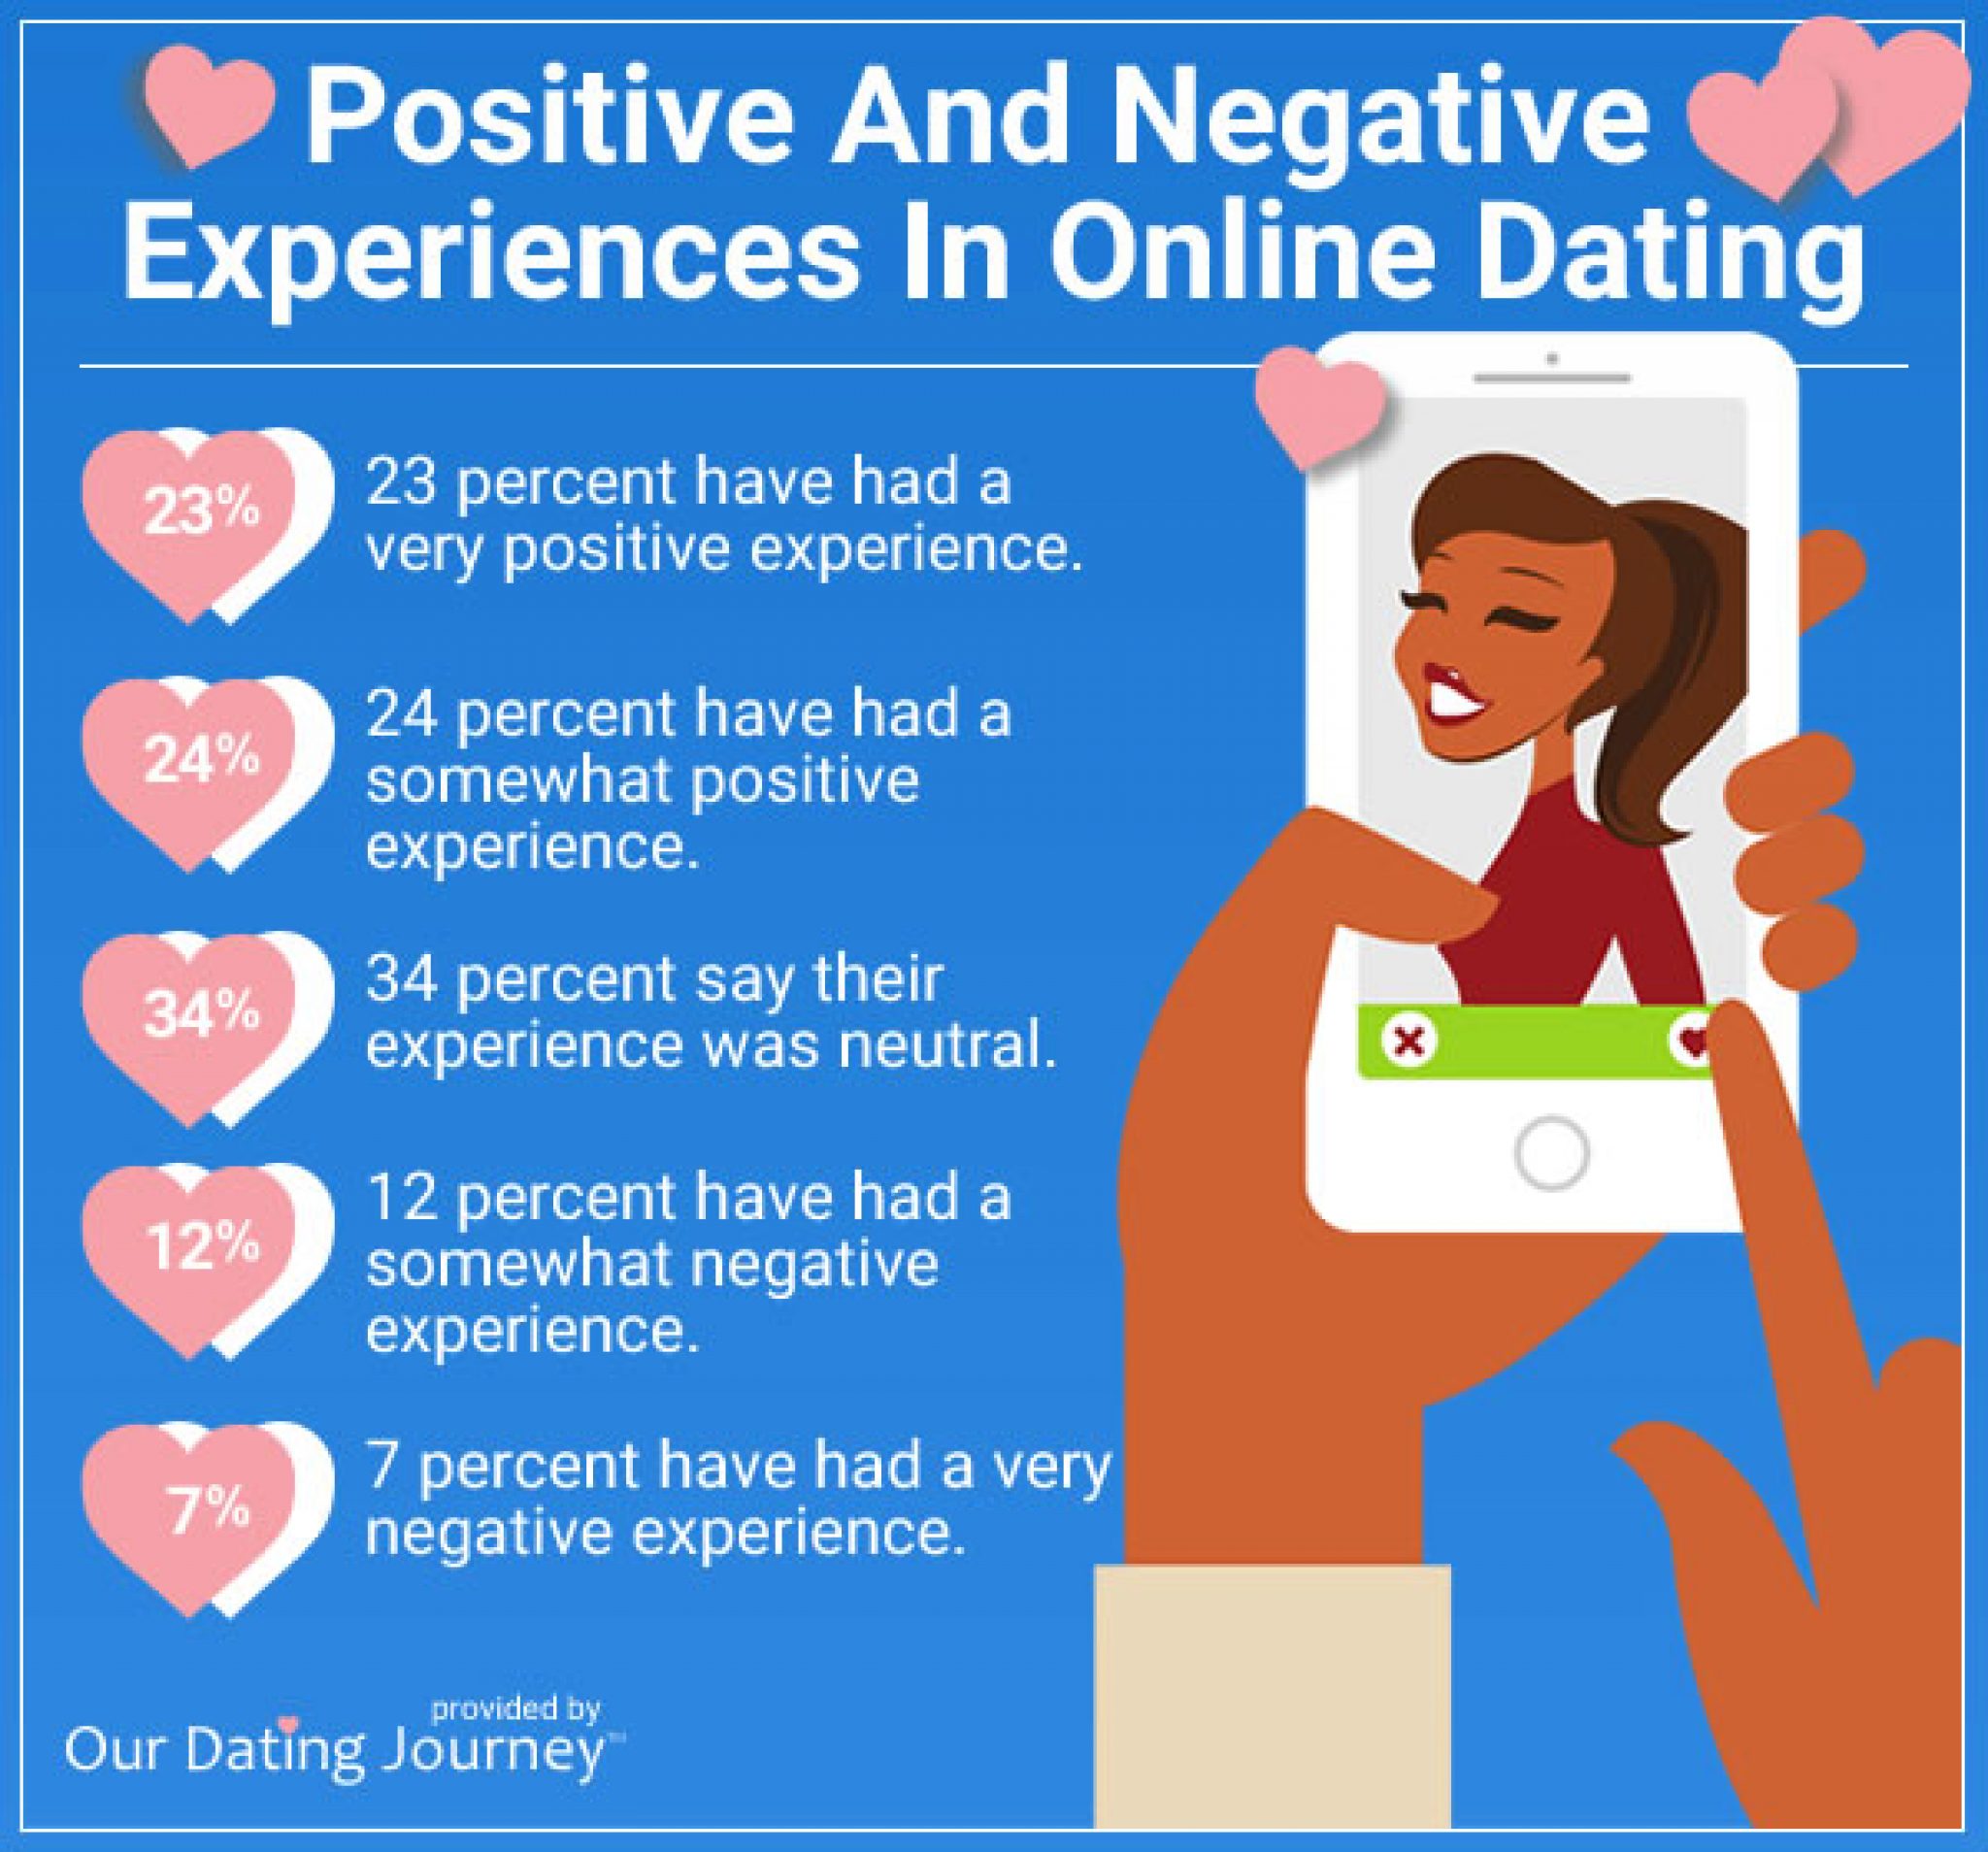 Online dating popularity statistics